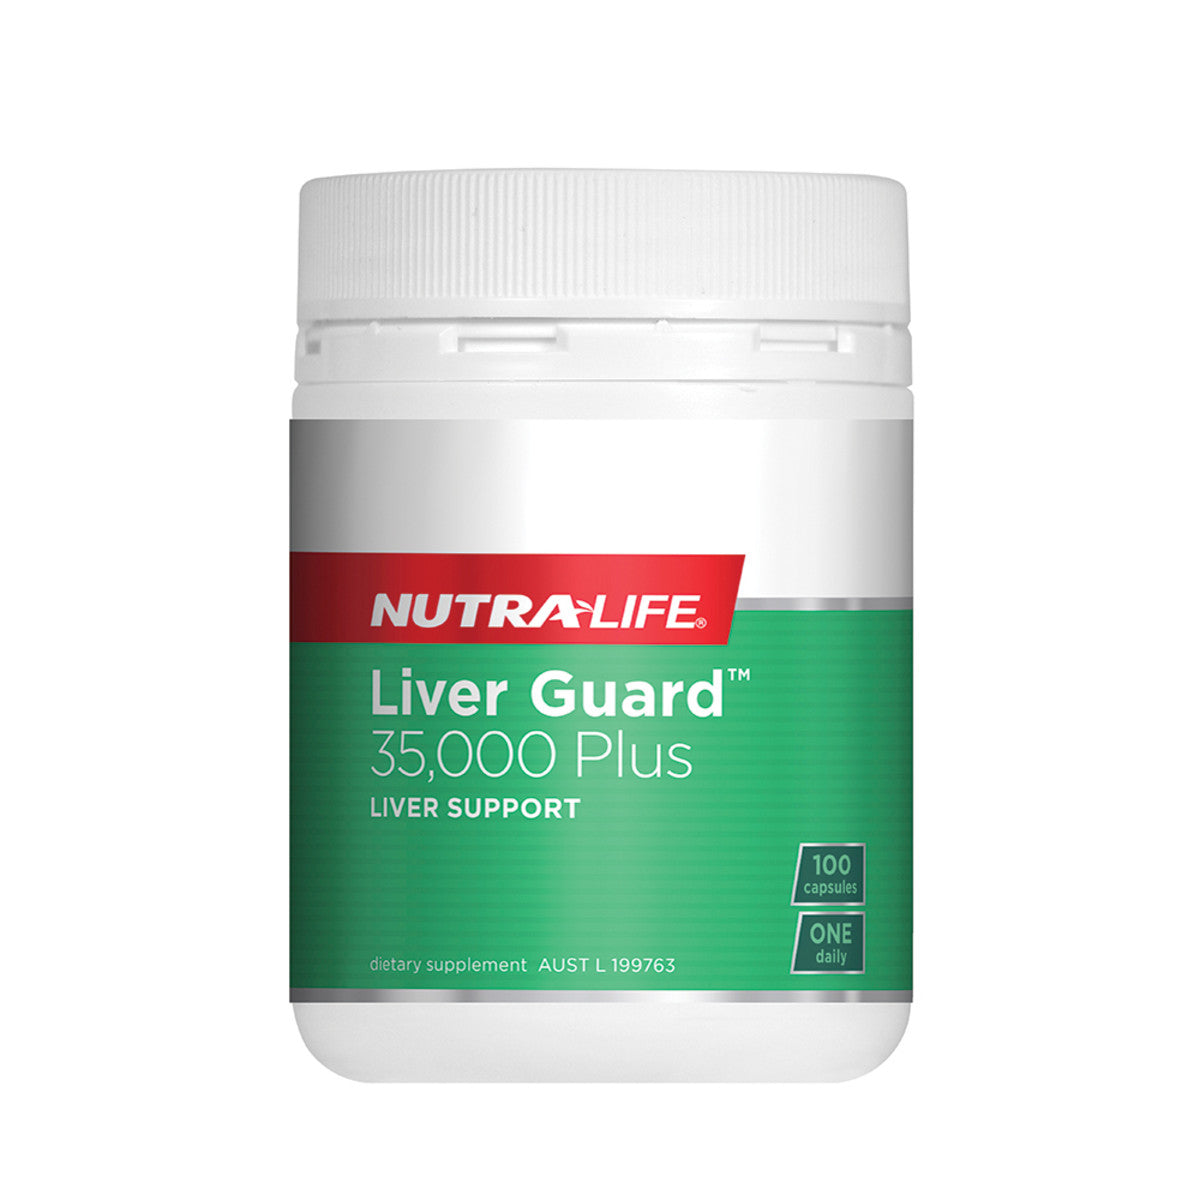 NutraLife - Liver Guard 35,000 Plus